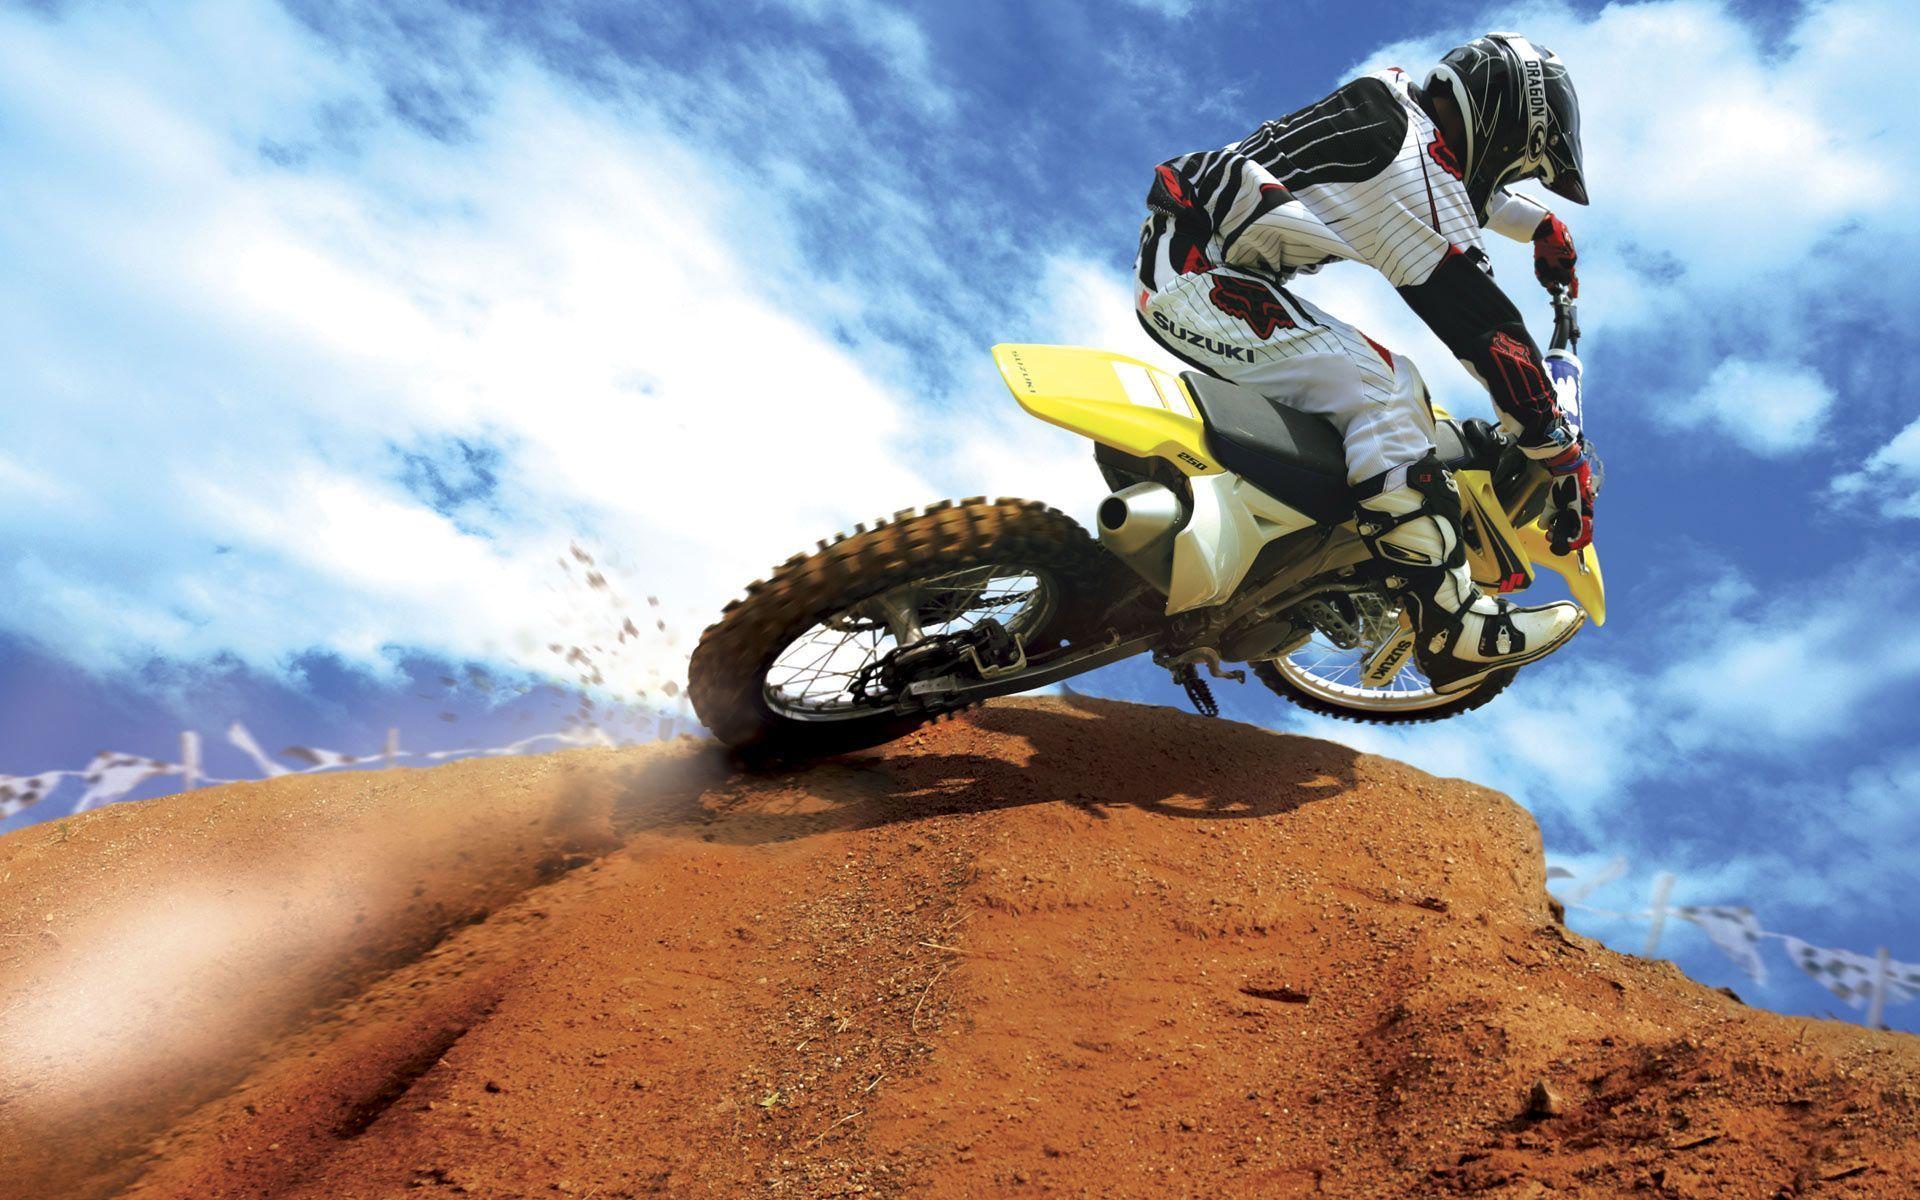 Crazy Motocross Bike desktop wallpaper hd, Auto Racing HD